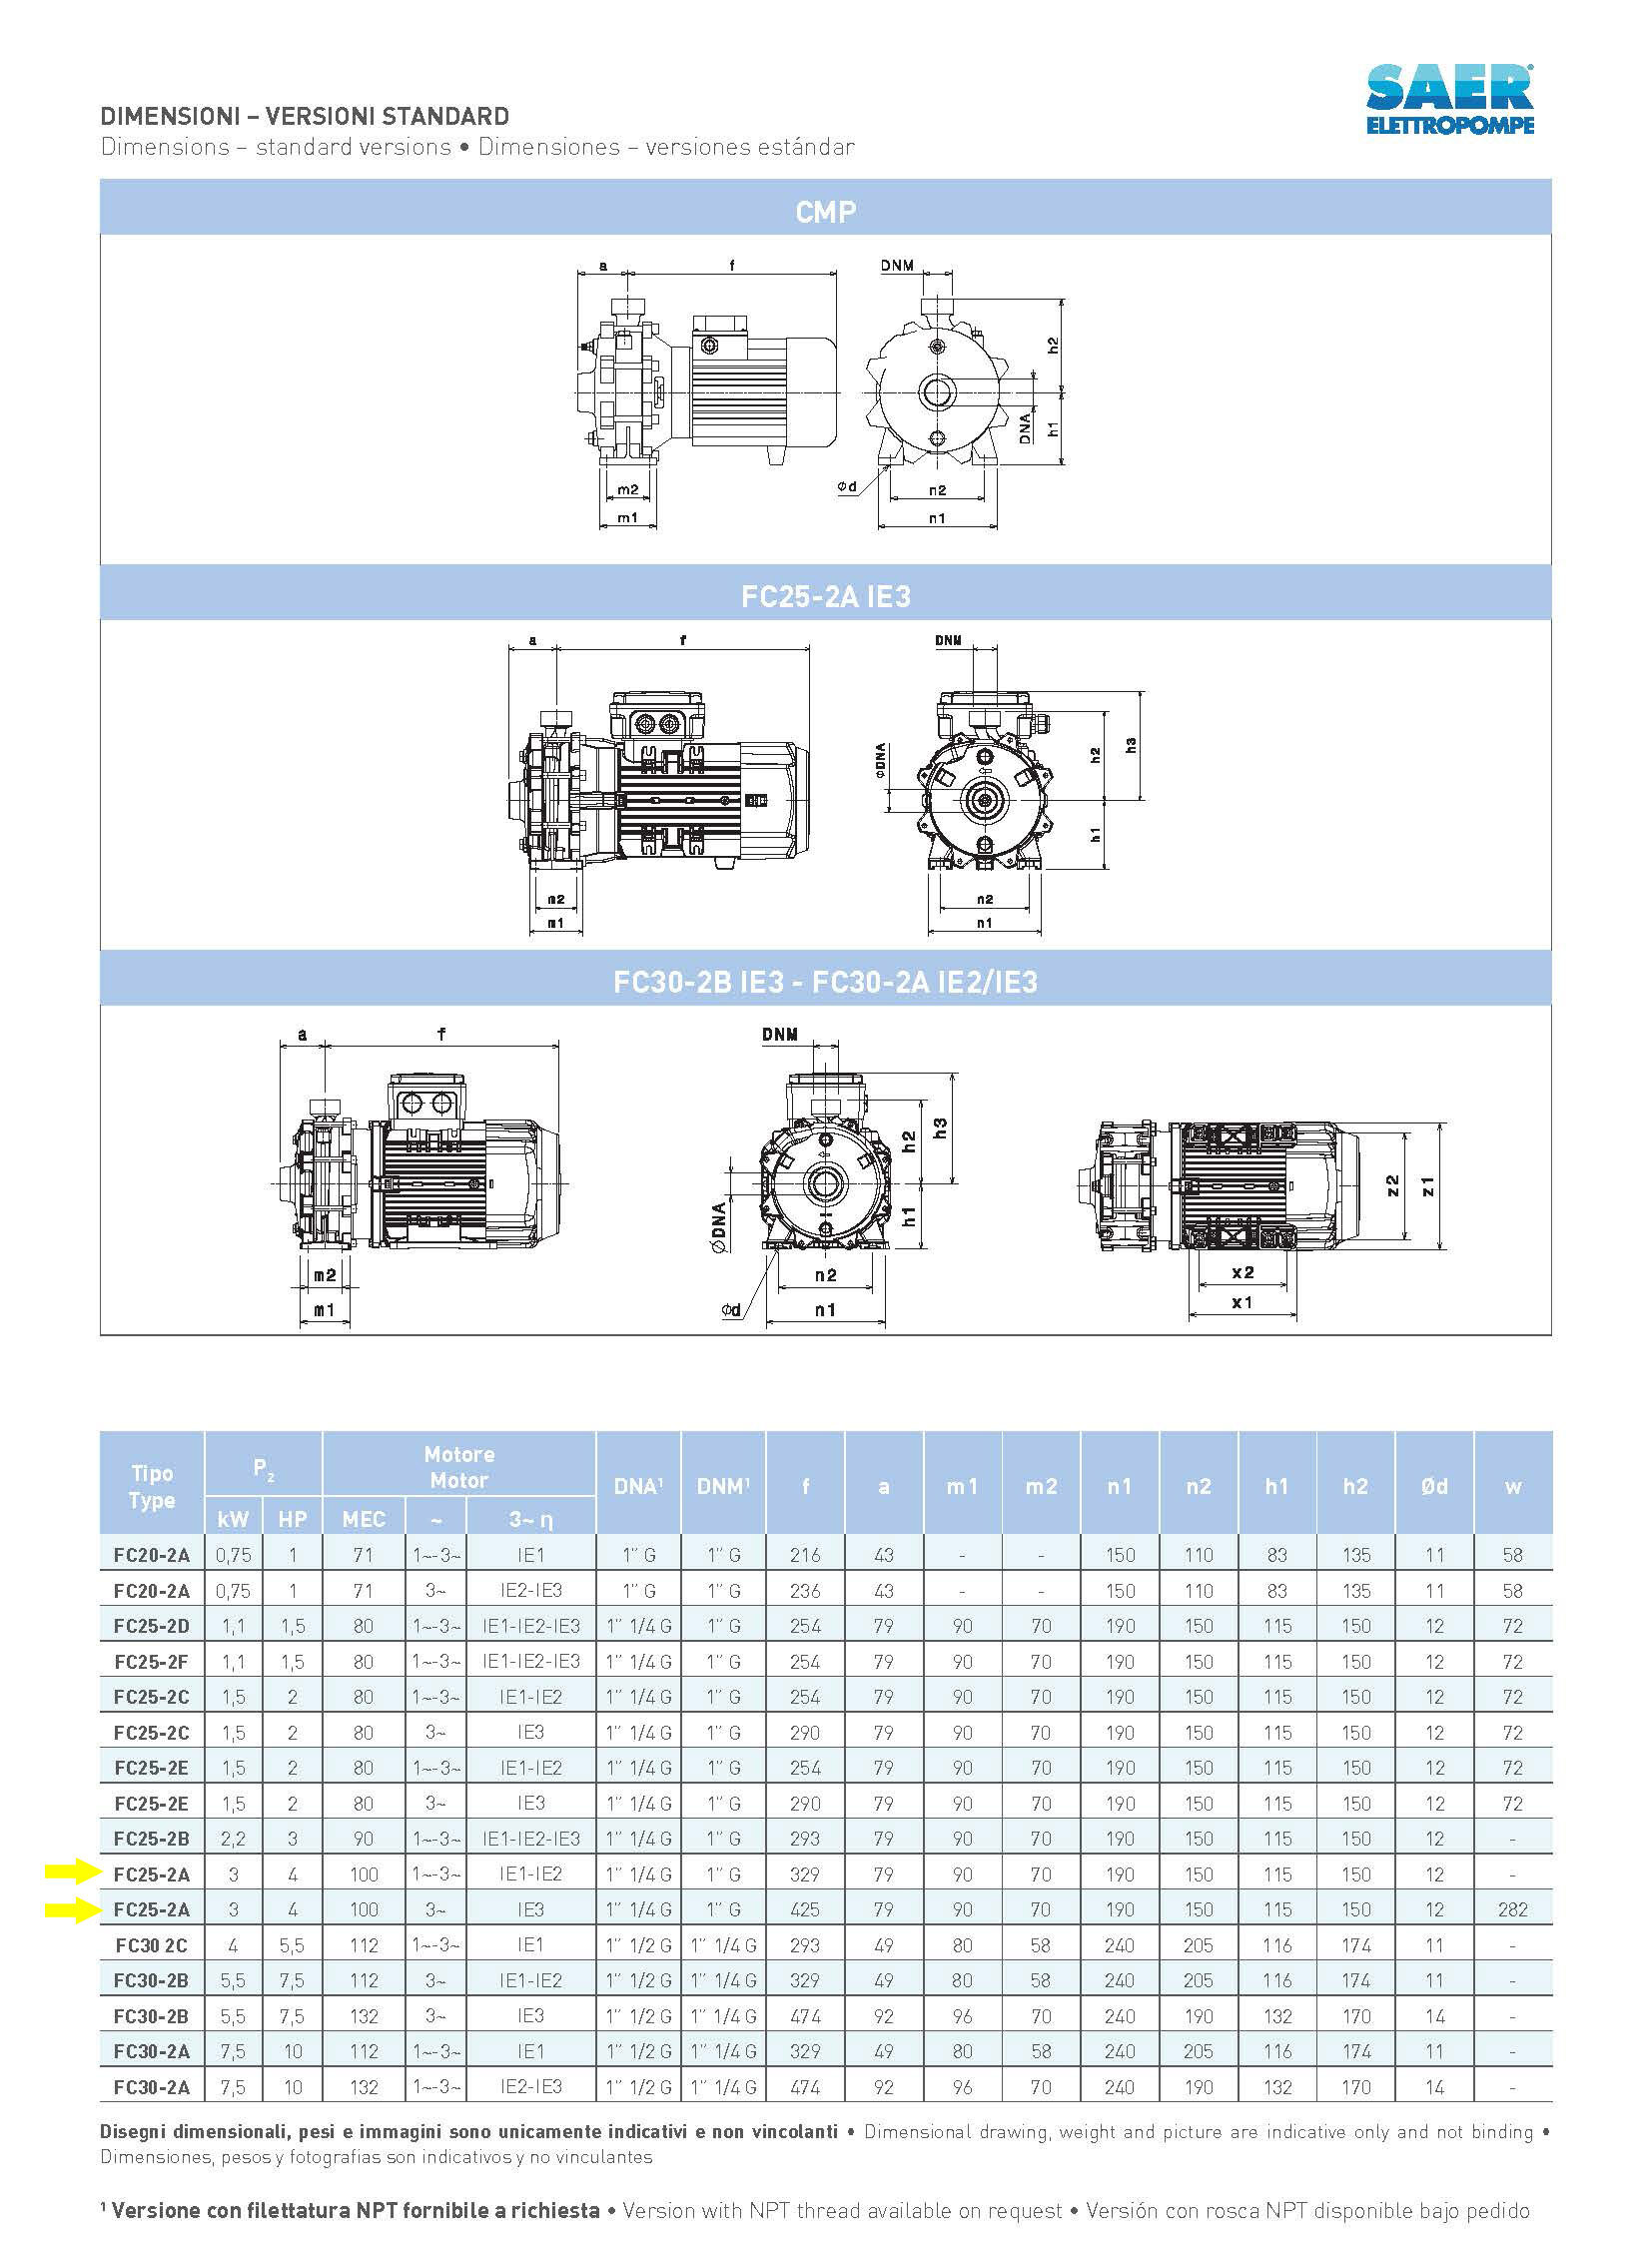 SAER-USA FC25-2A Centrifugal Pump - Dimensions